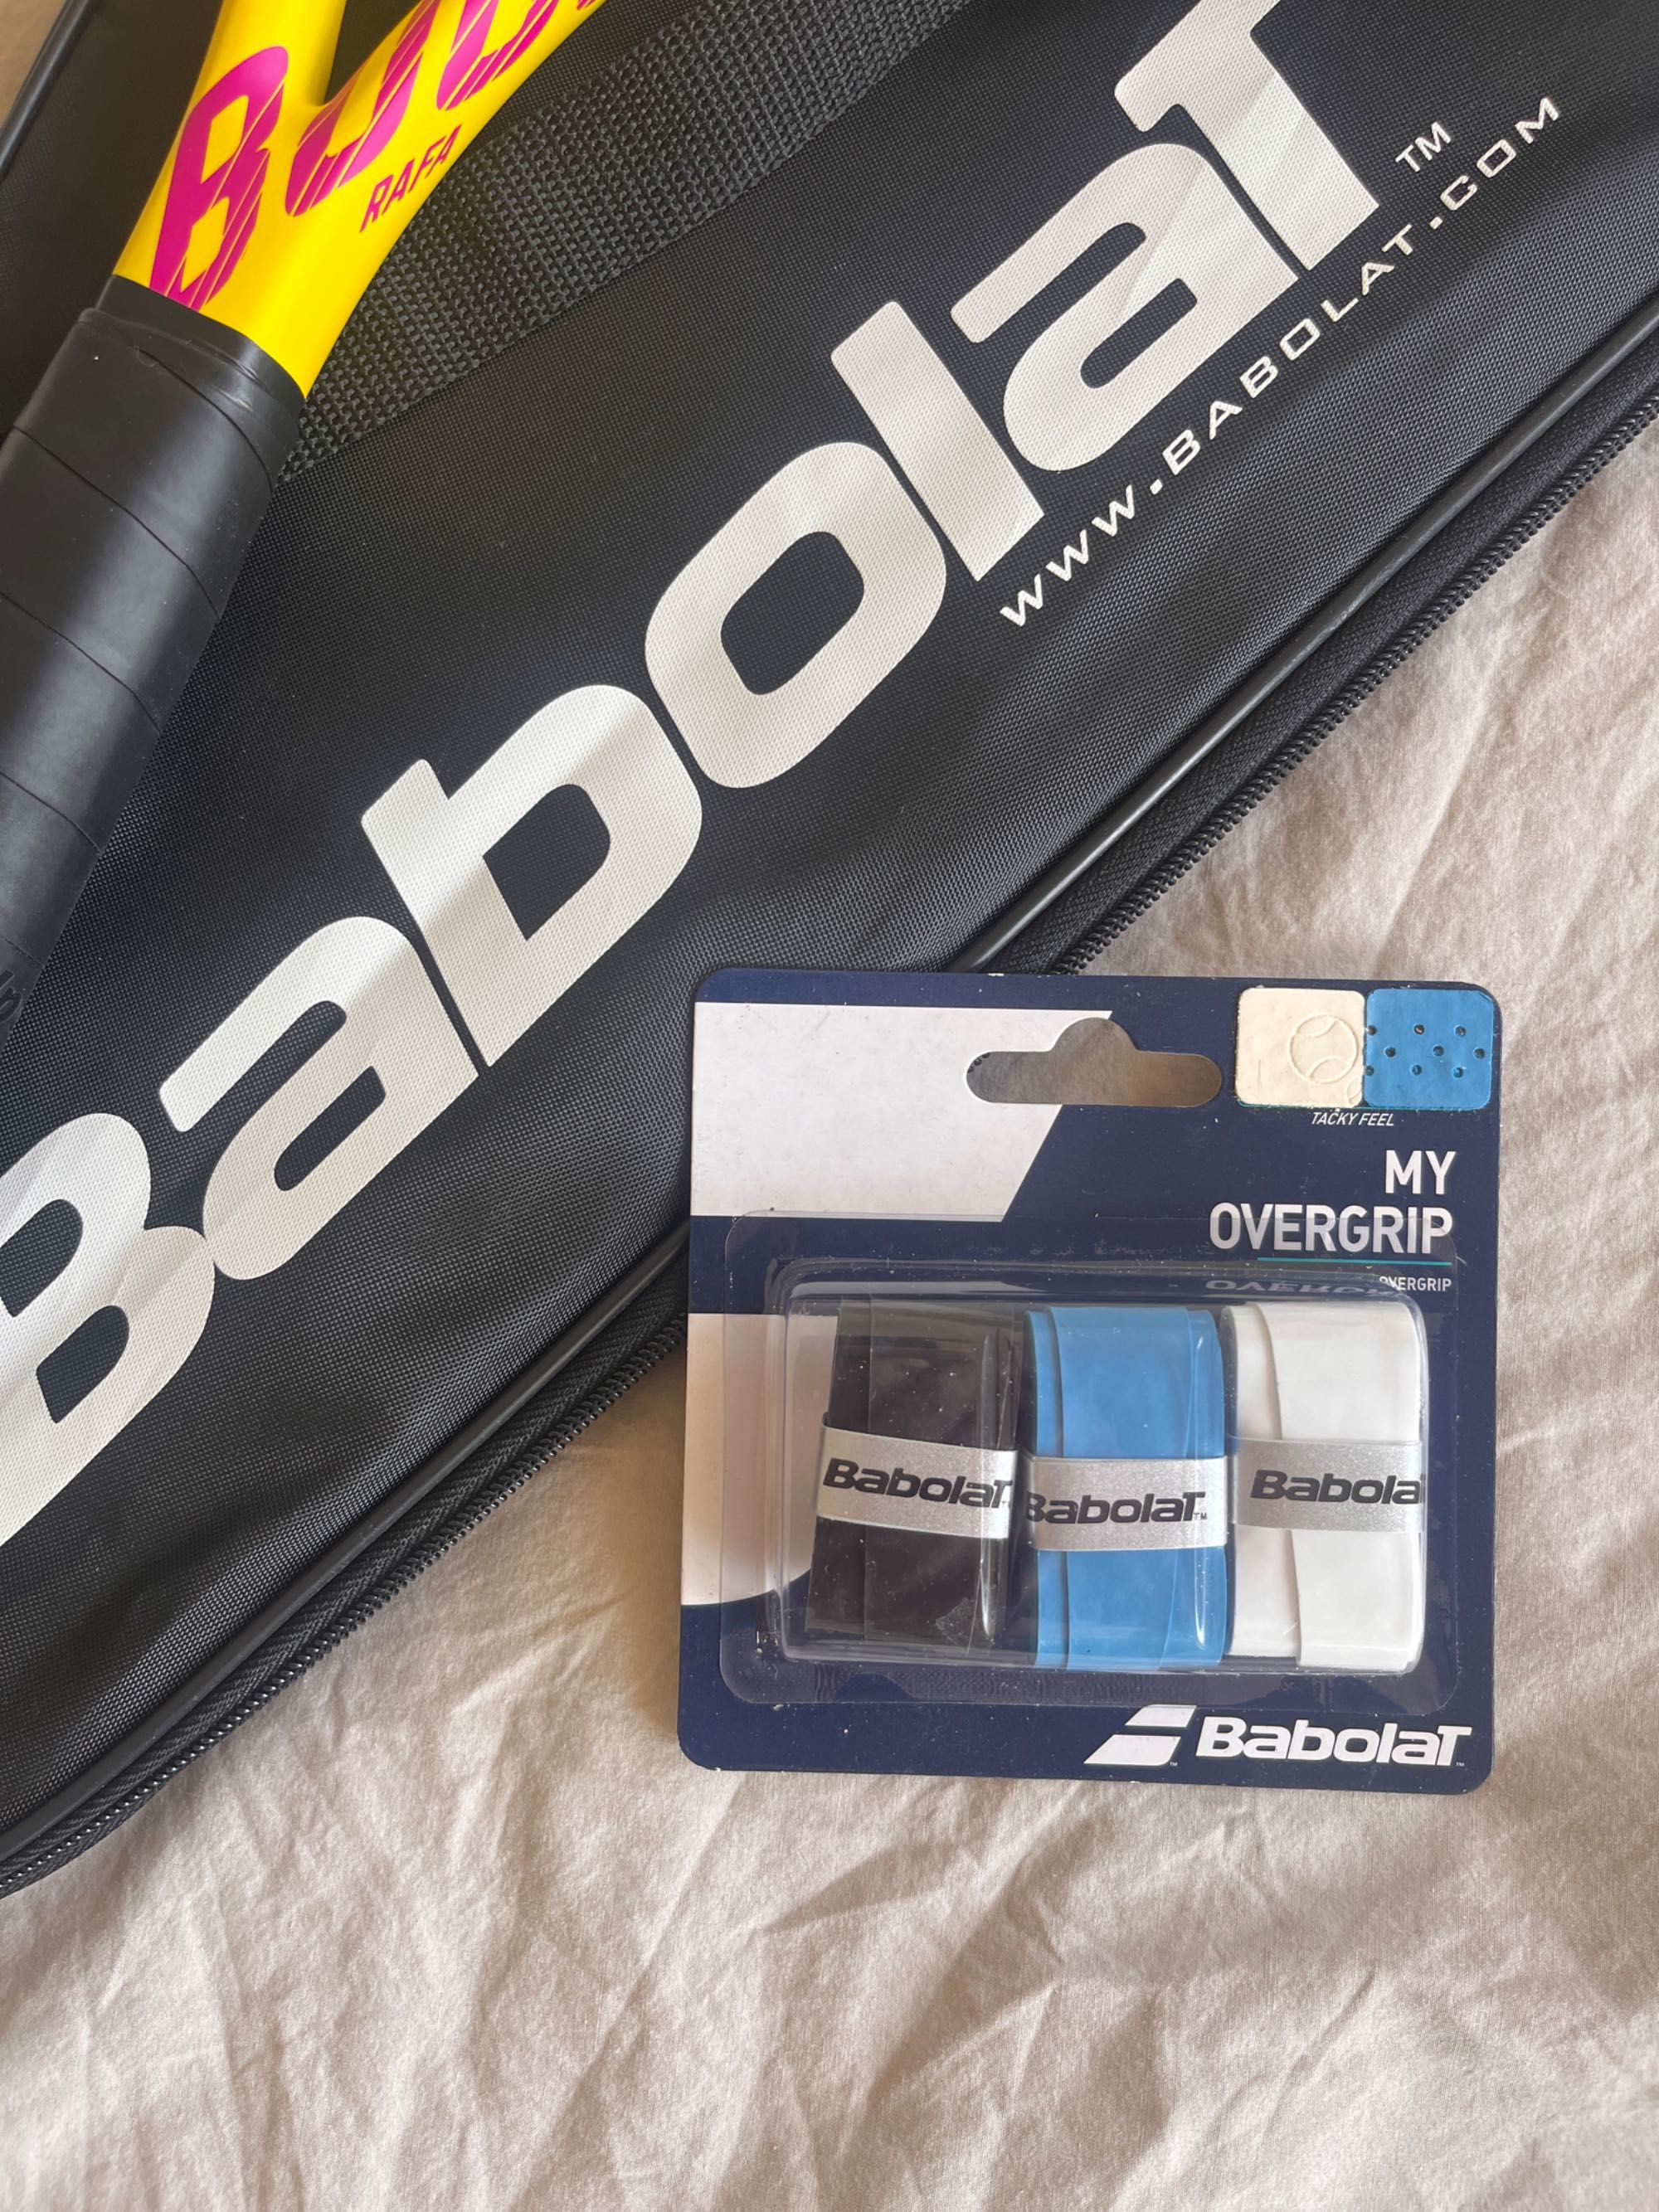 raquete de tênis Babolat boost by Rafa nova + bolsa e overgrip extra